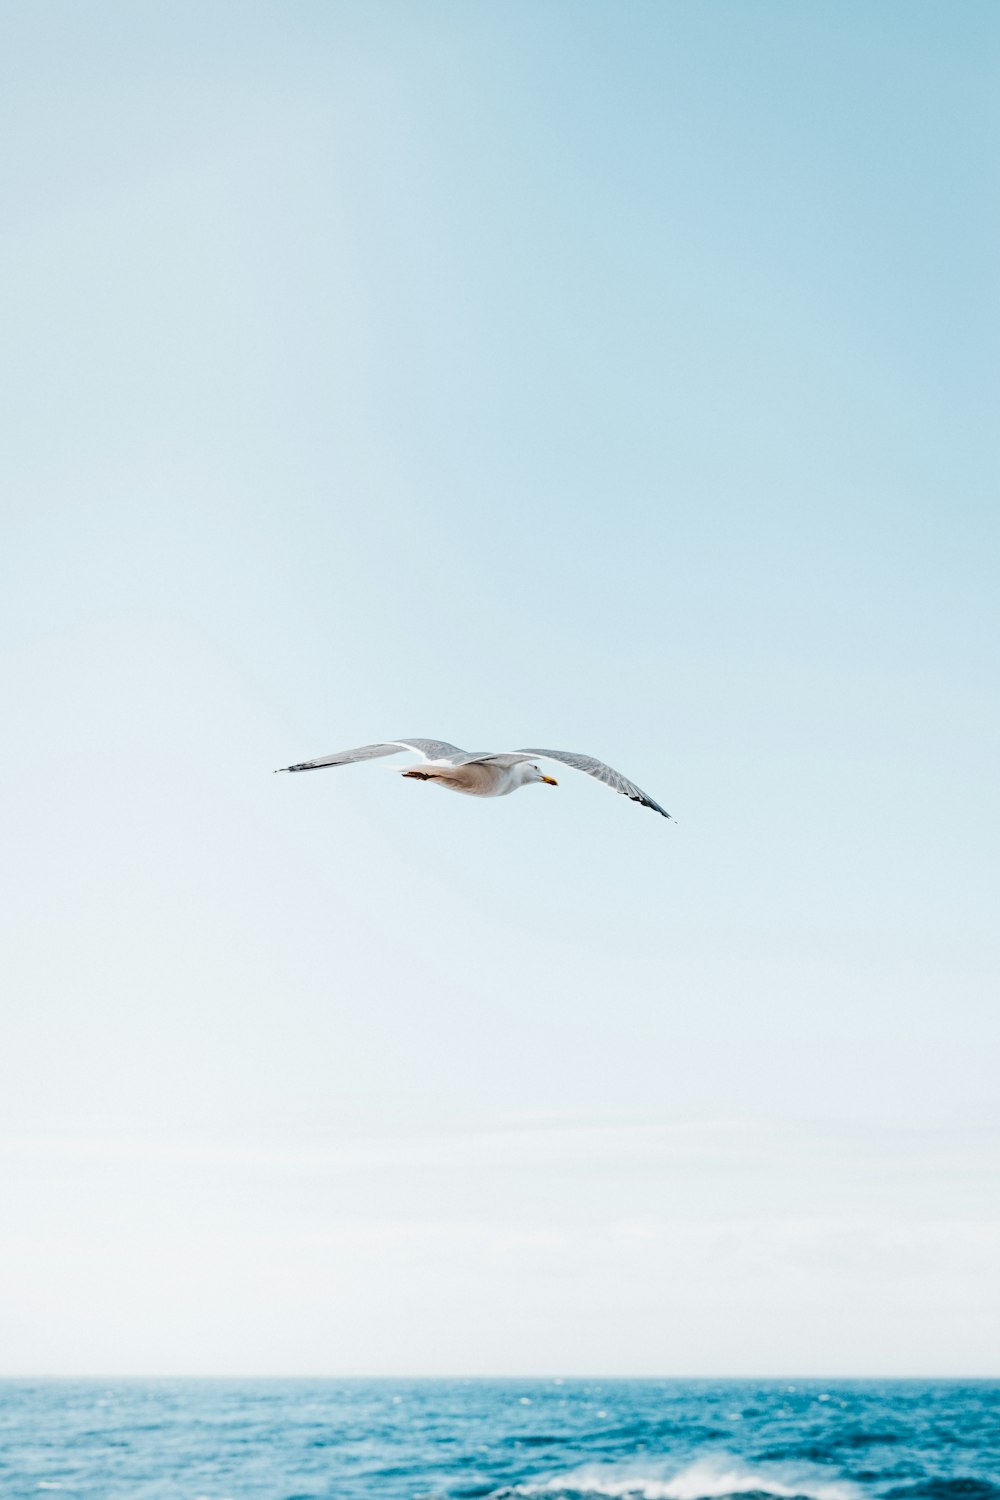 Fotografía time-lapse de gaviota en vuelo sobre el océano azul